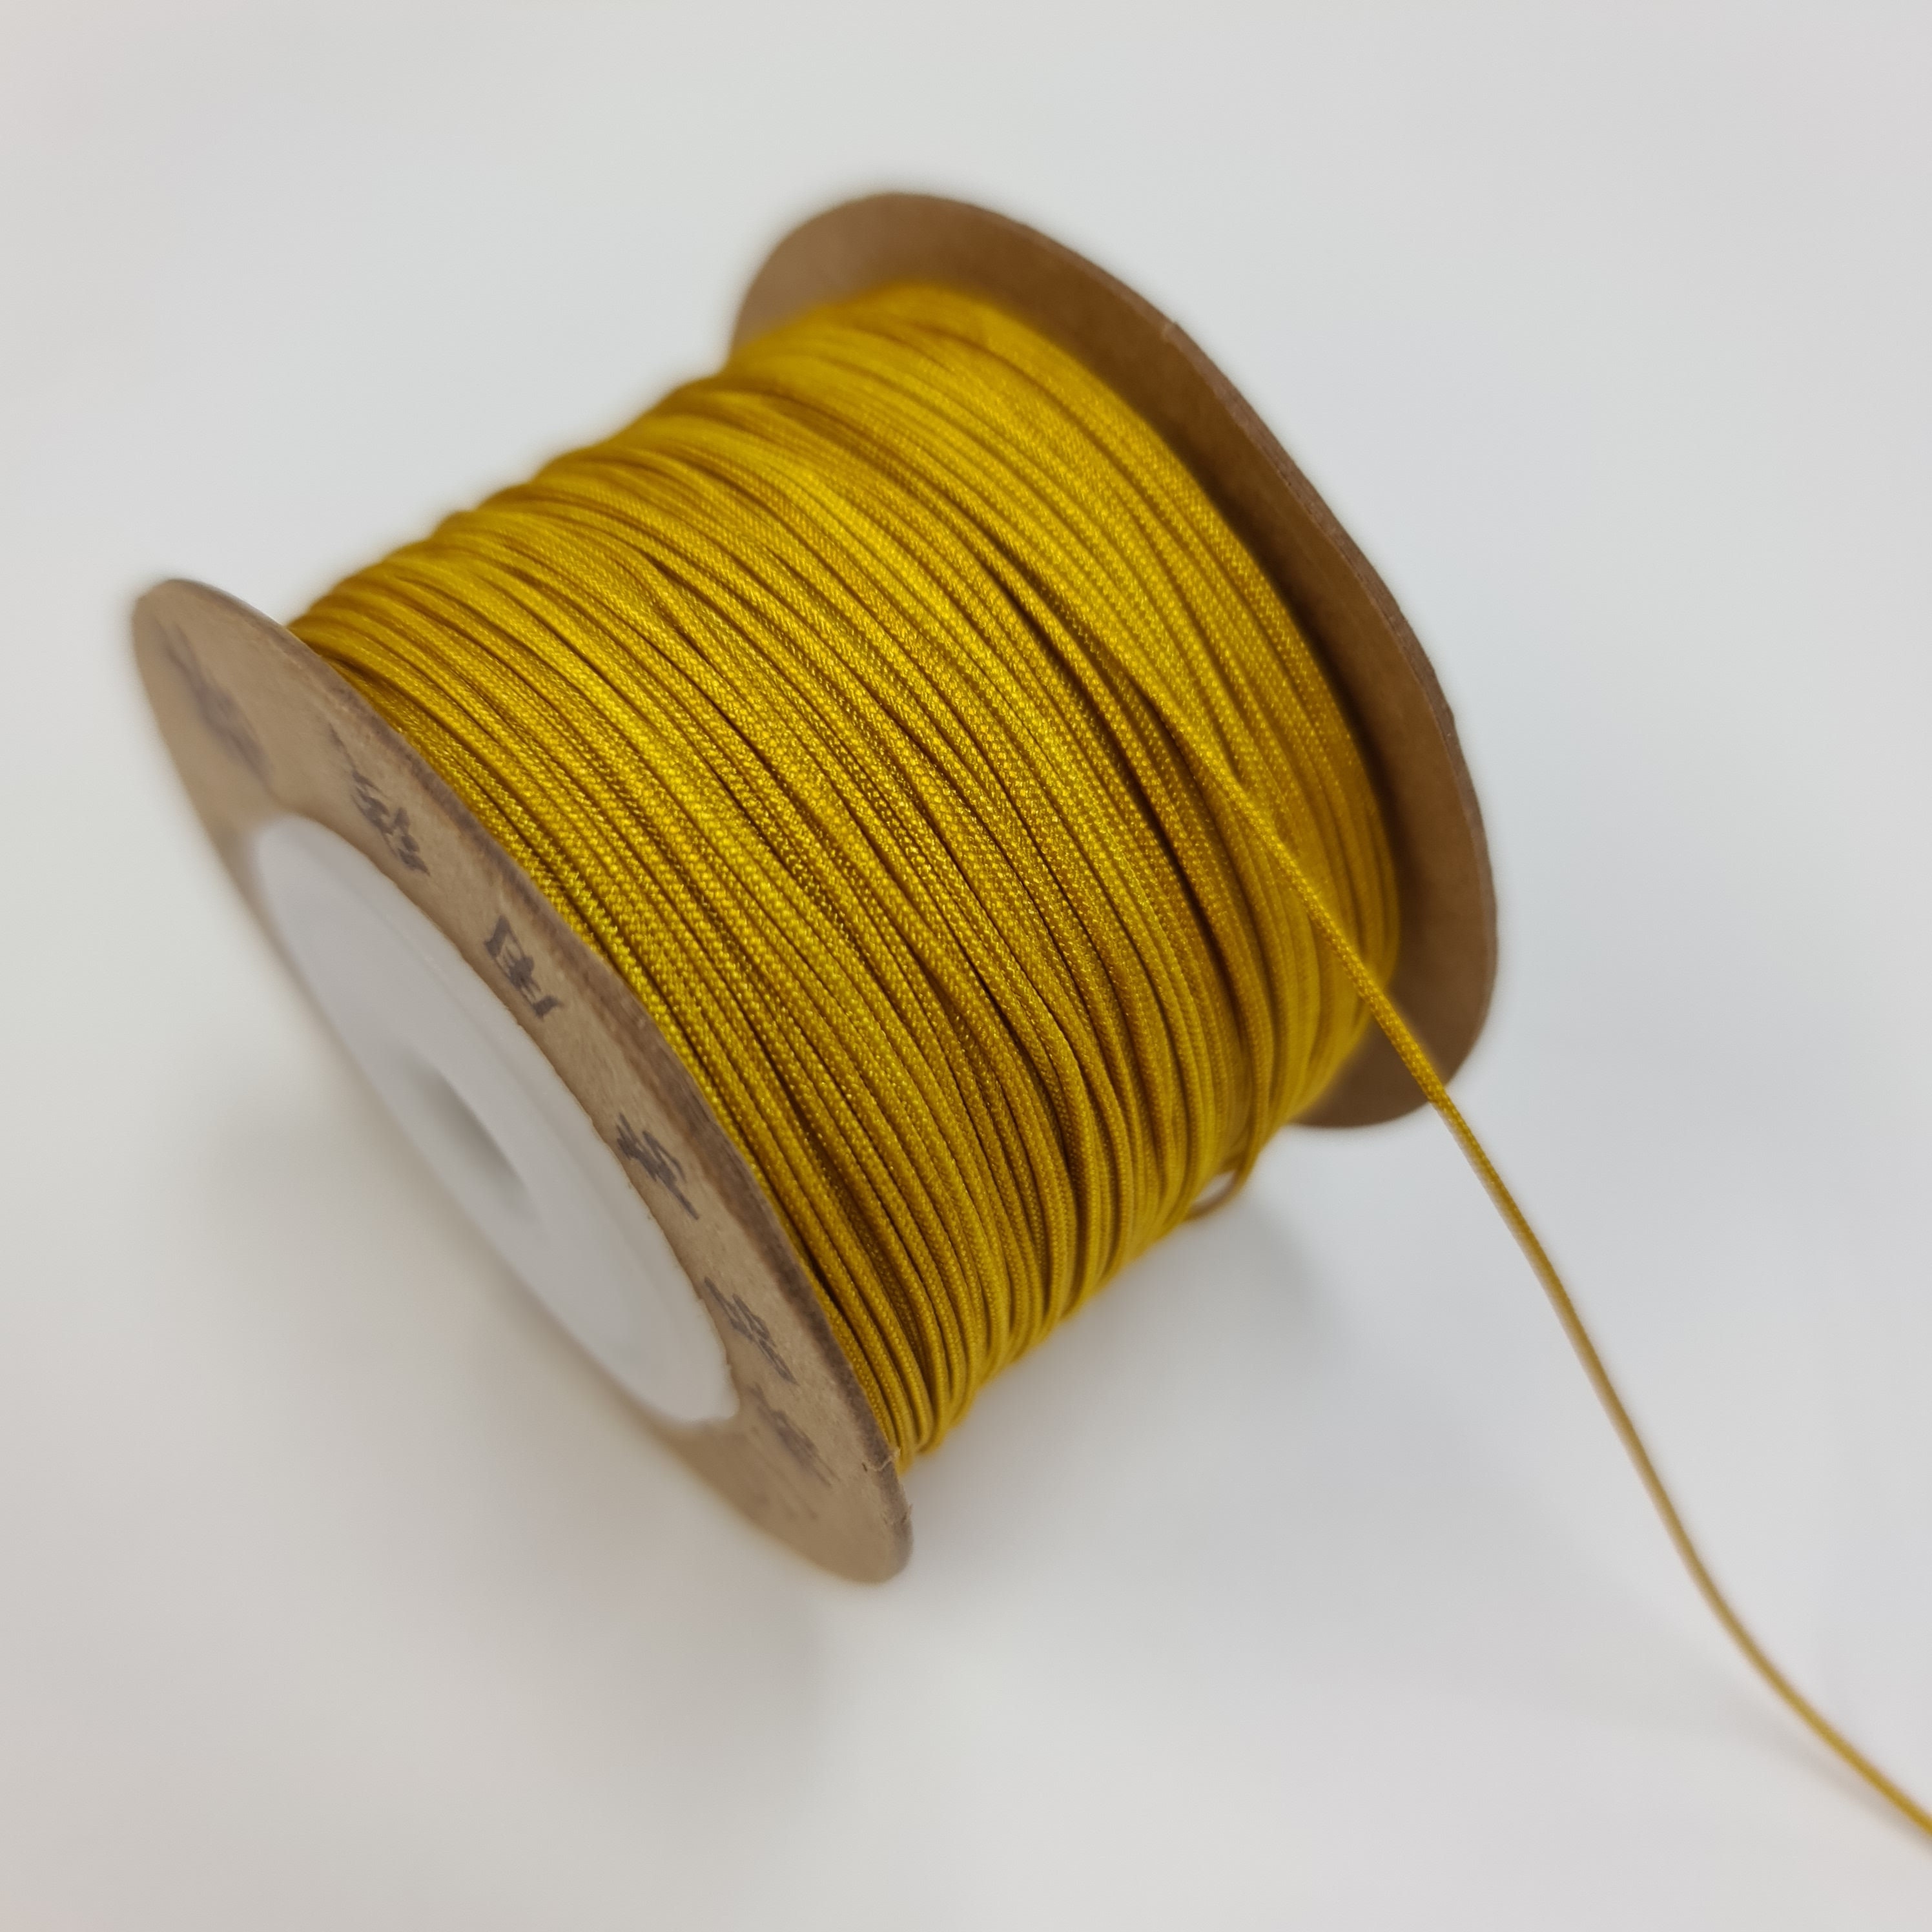 Maine Thread, Twisted Waxed Cord, 70 yard spool, Seal 